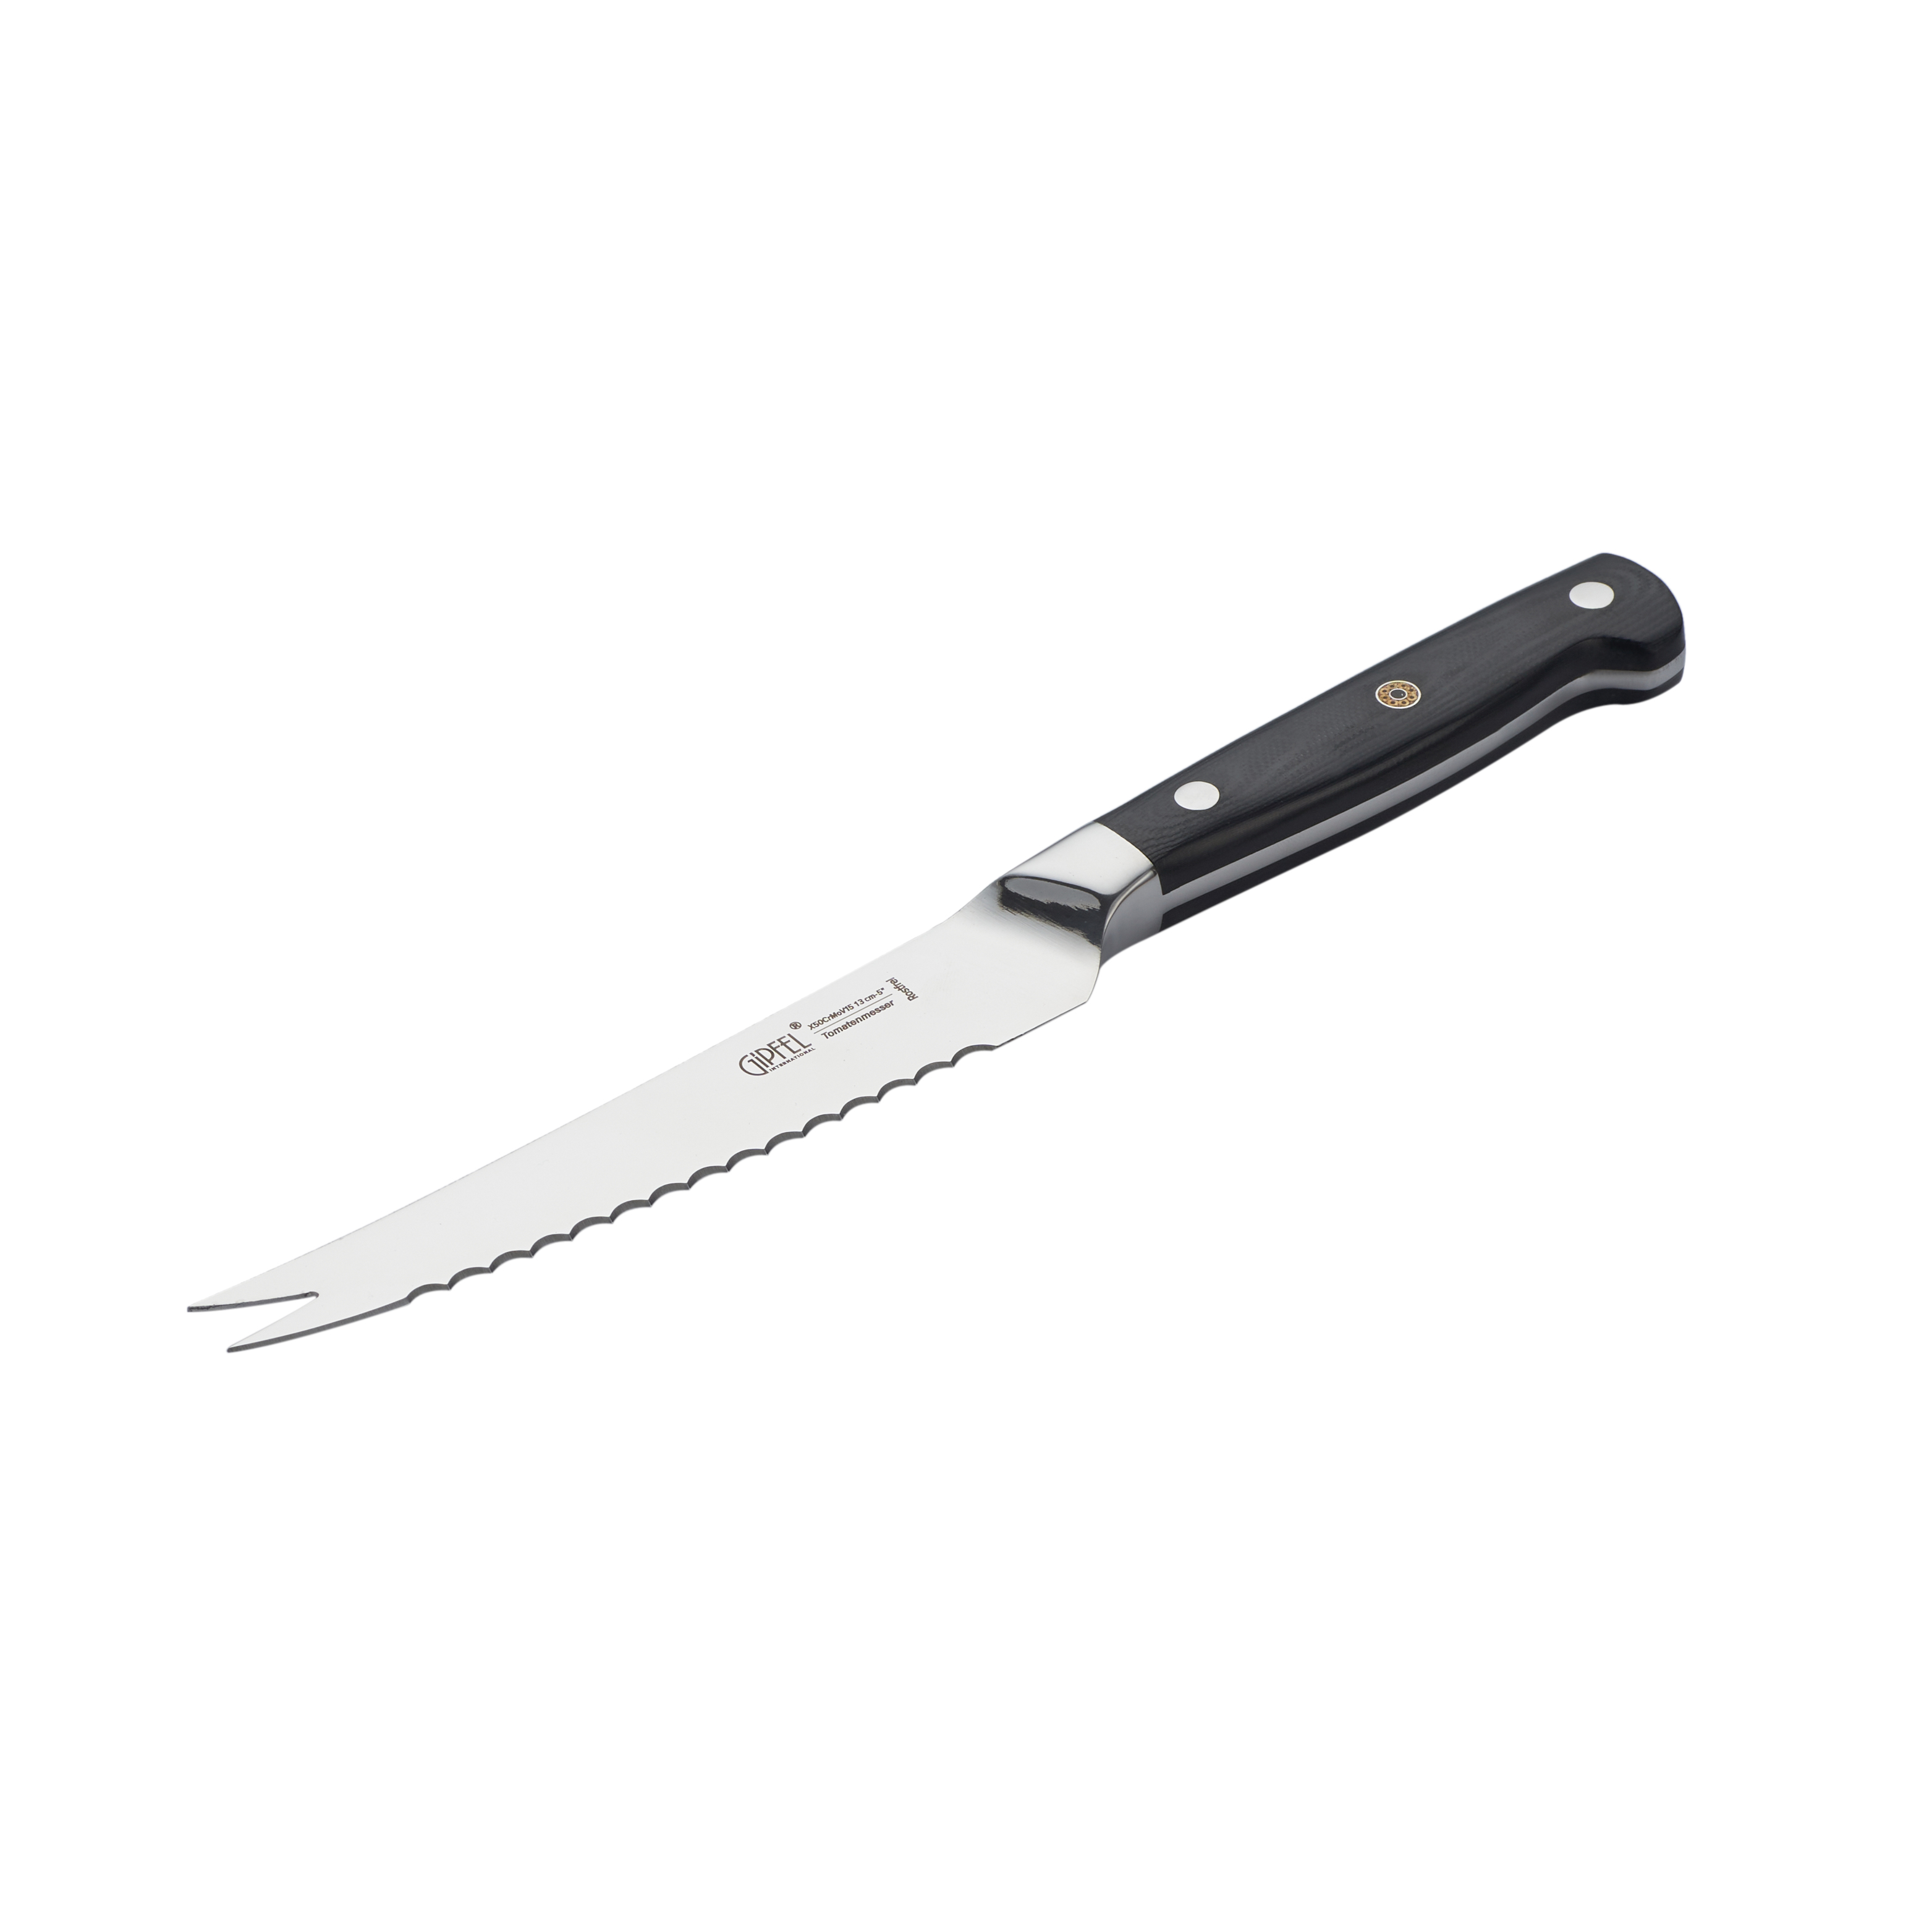 Нож для томатов Gipfel New Professional 8660 13 см фото